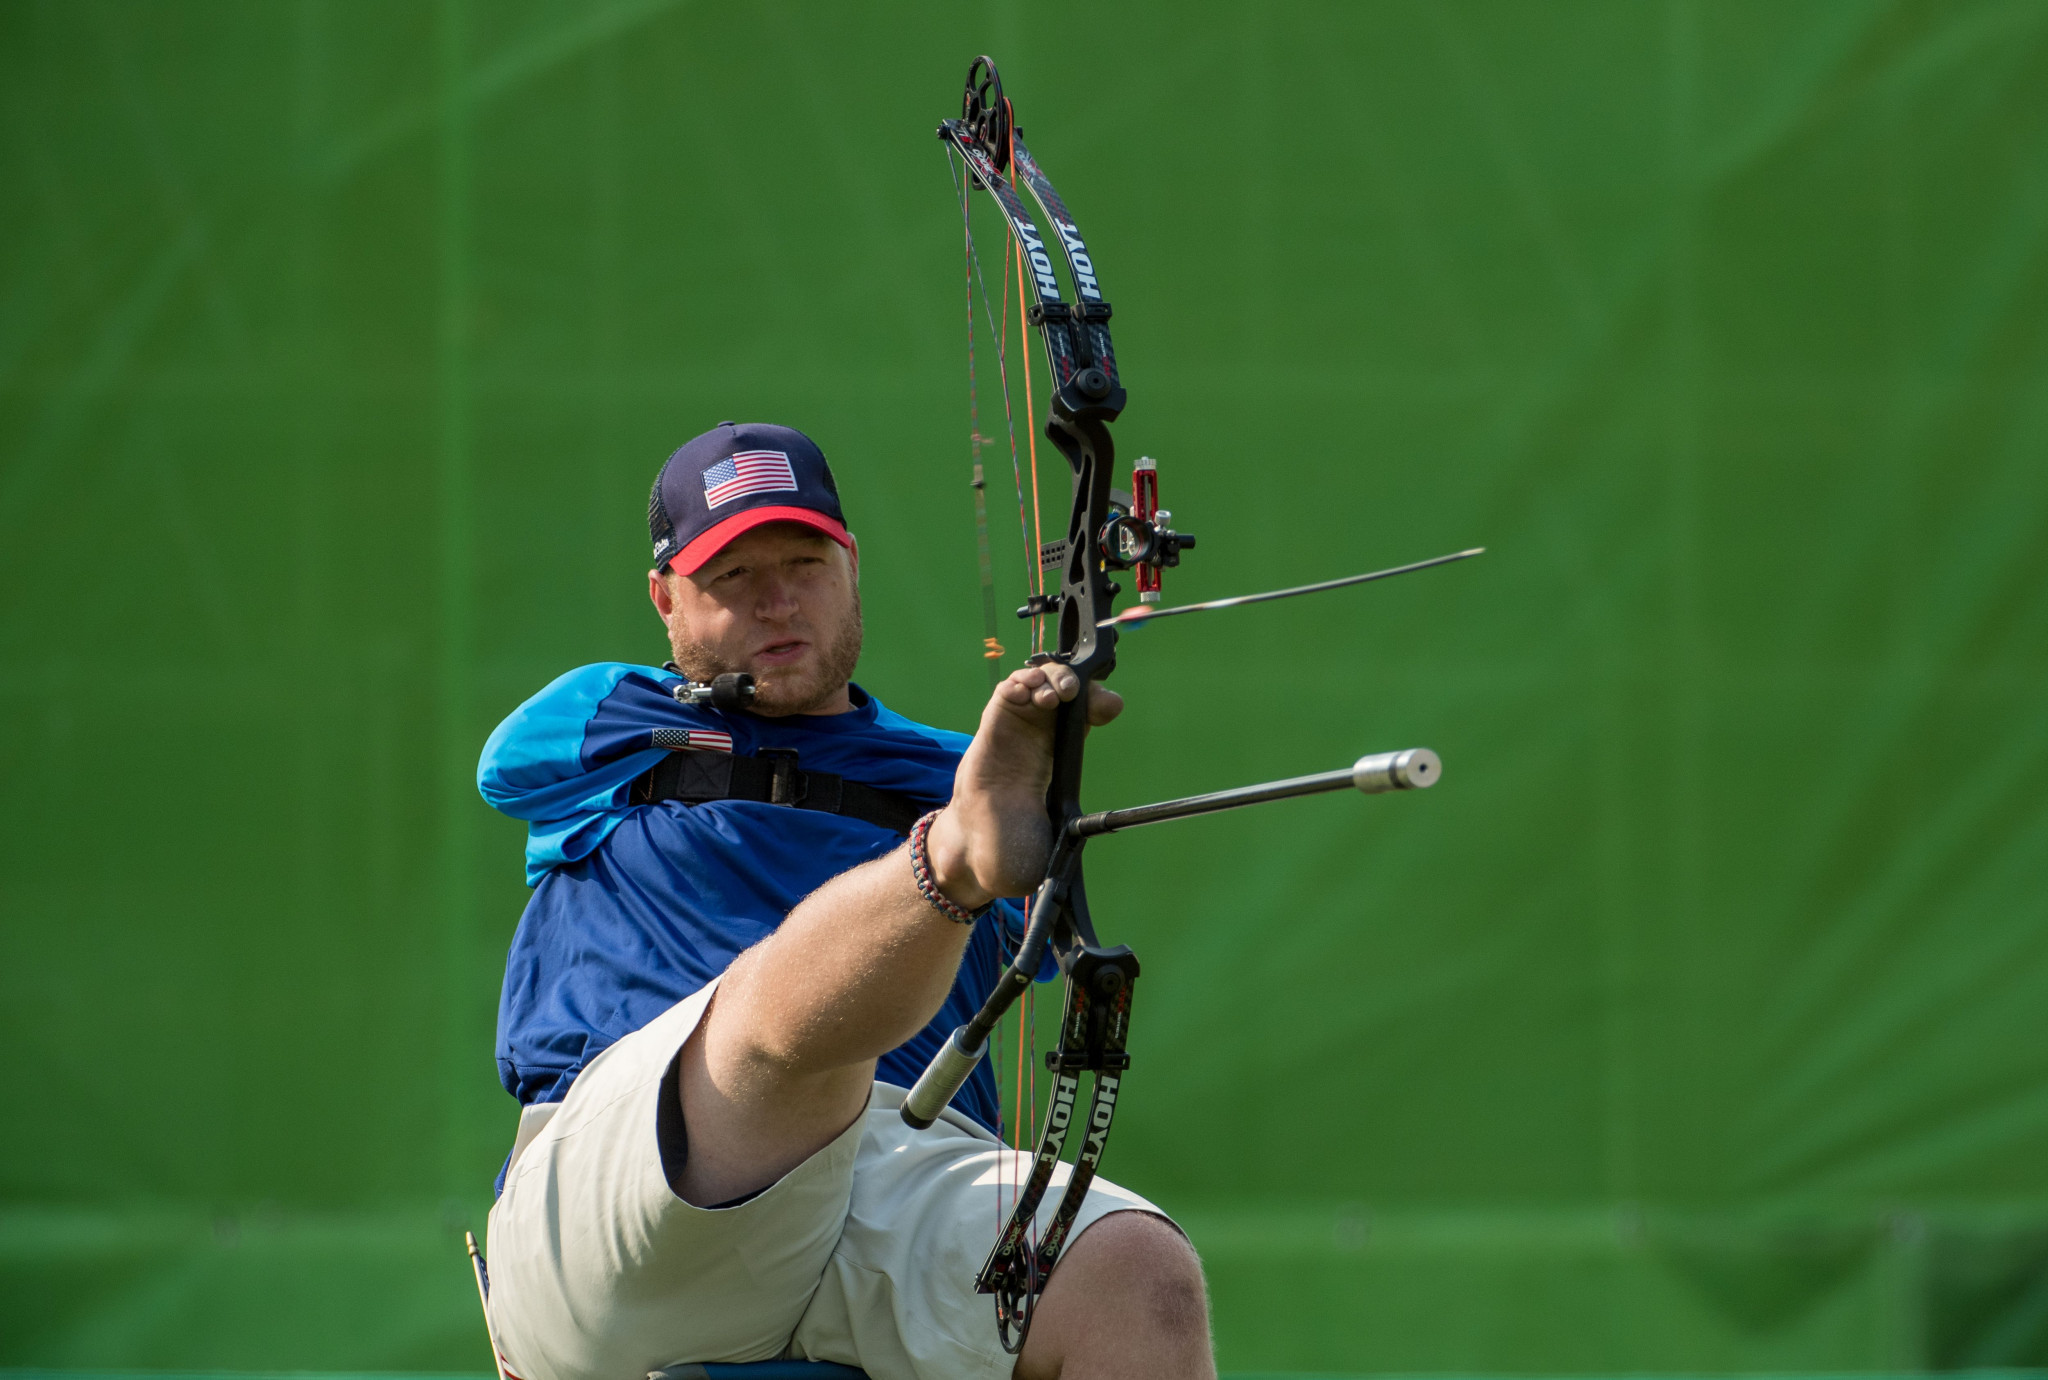 Matt Stutzman is focusing on outdoor archery to preserve his health ©Getty Images